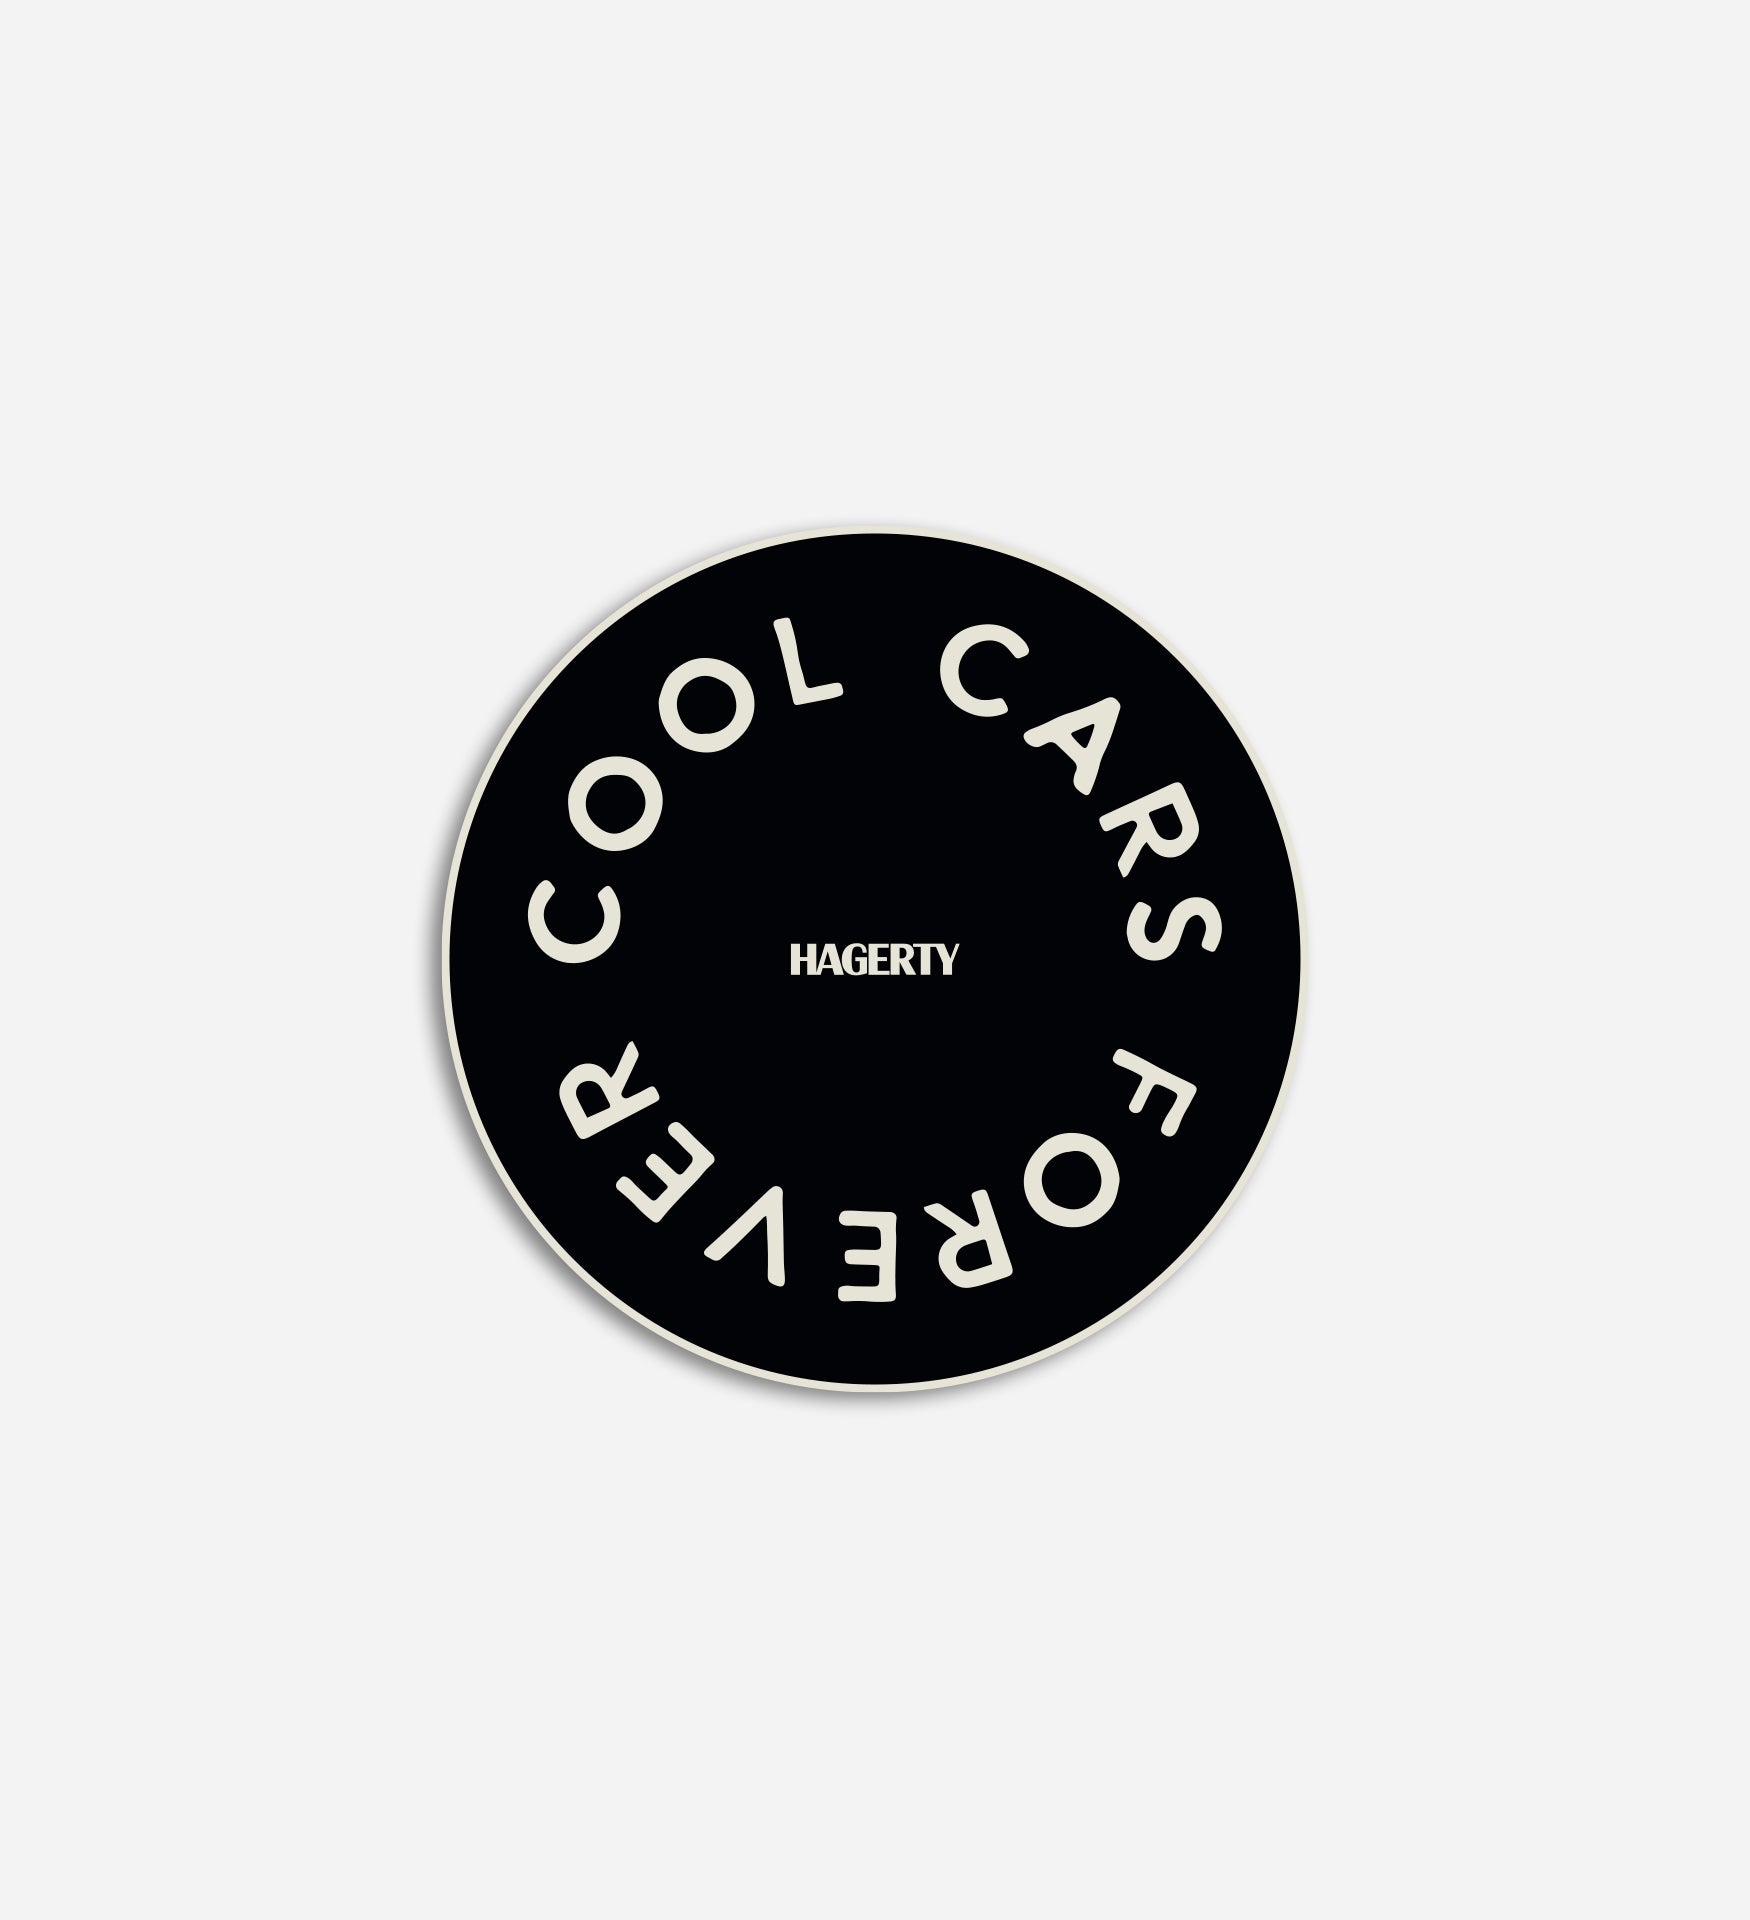 Cool Cars Sticker